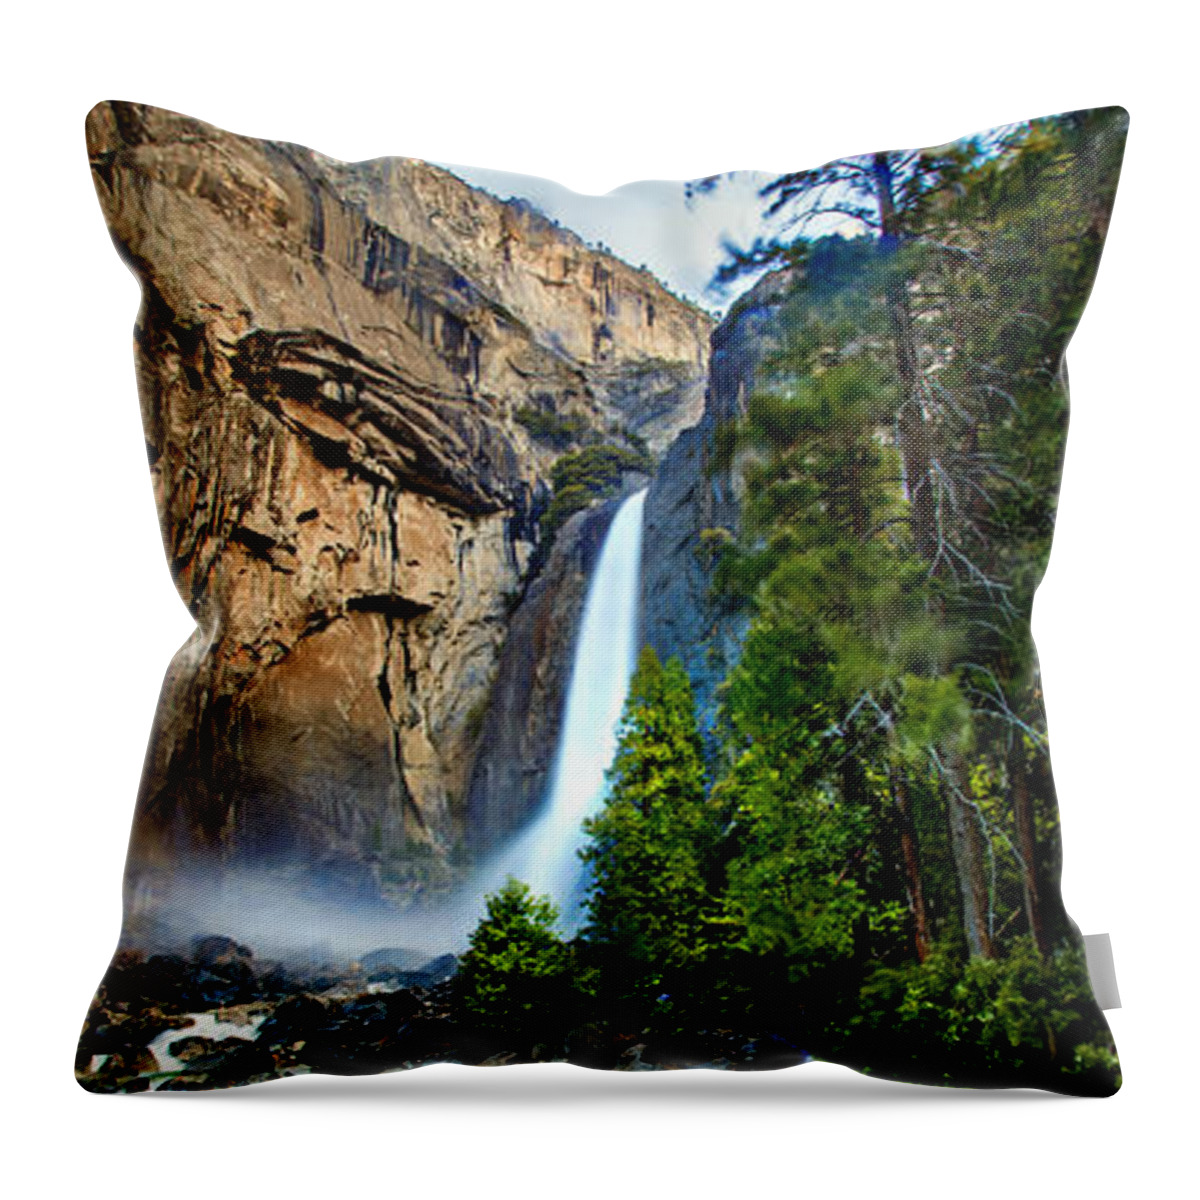 Yosemite National Park Throw Pillow featuring the photograph Yosemite Waterfall by Az Jackson